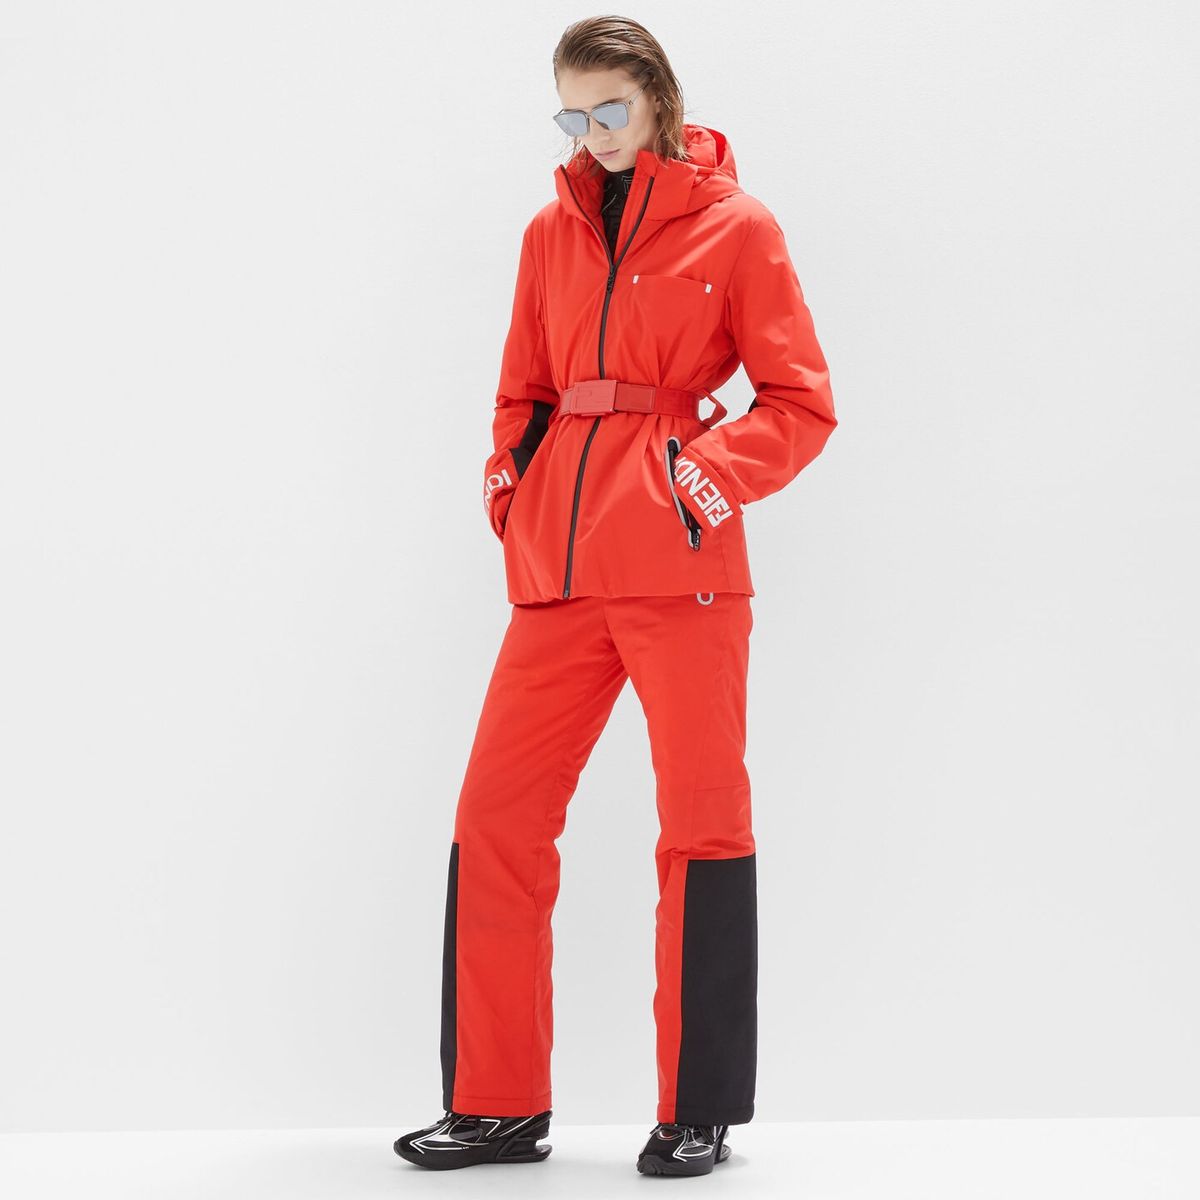 Women's Ski Clothes, Jackets, Trousers & Suits